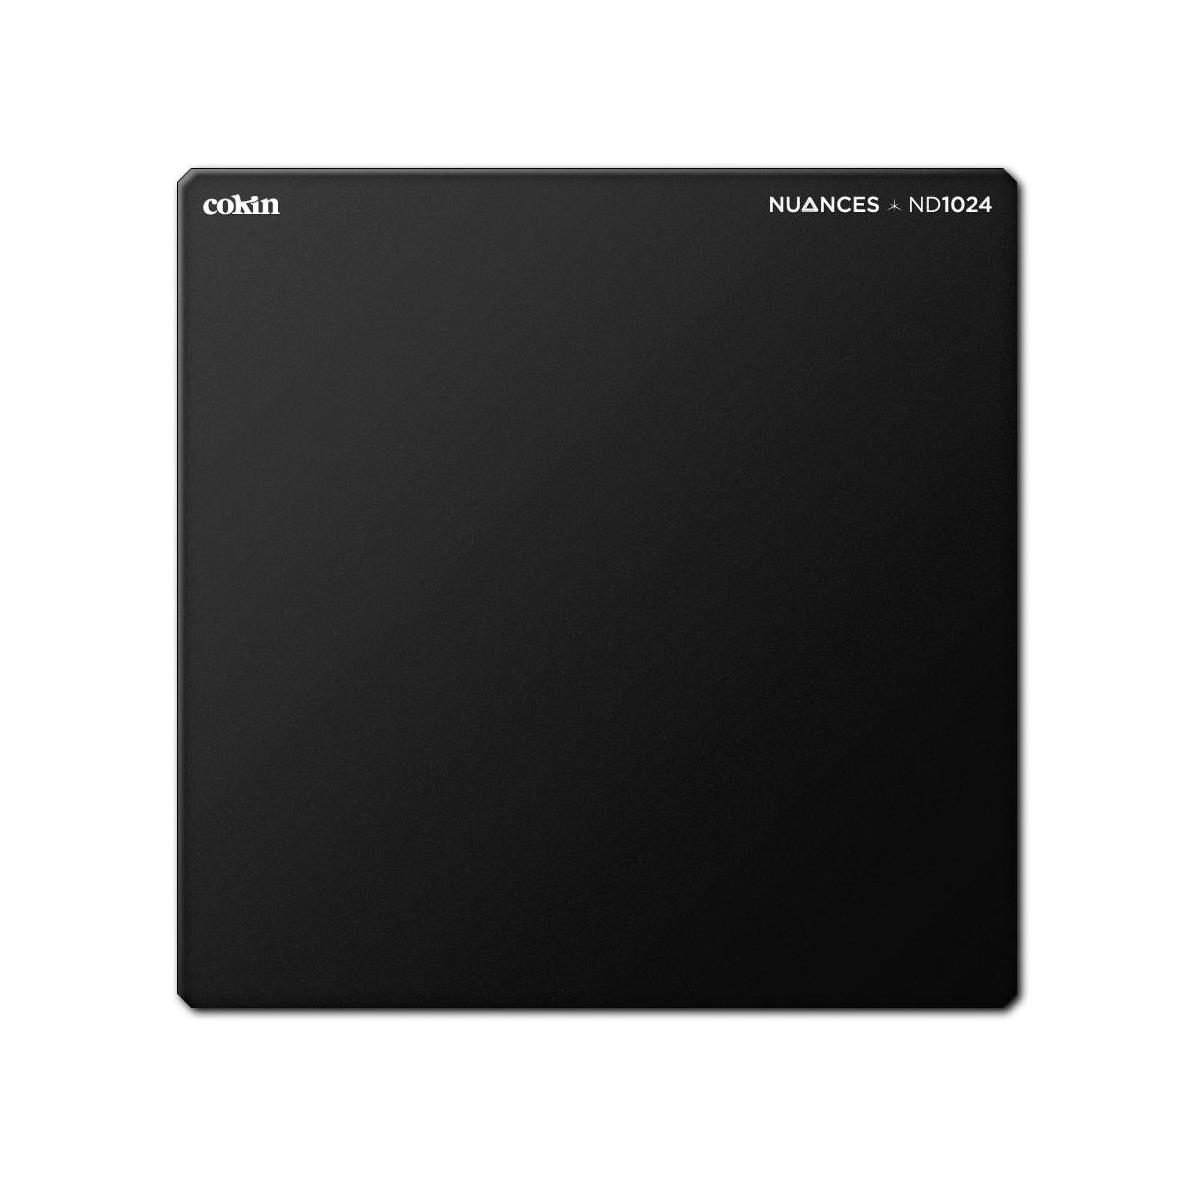 Cokin 84 x 84mm NUANCES Neutral Density  3.0 Filter